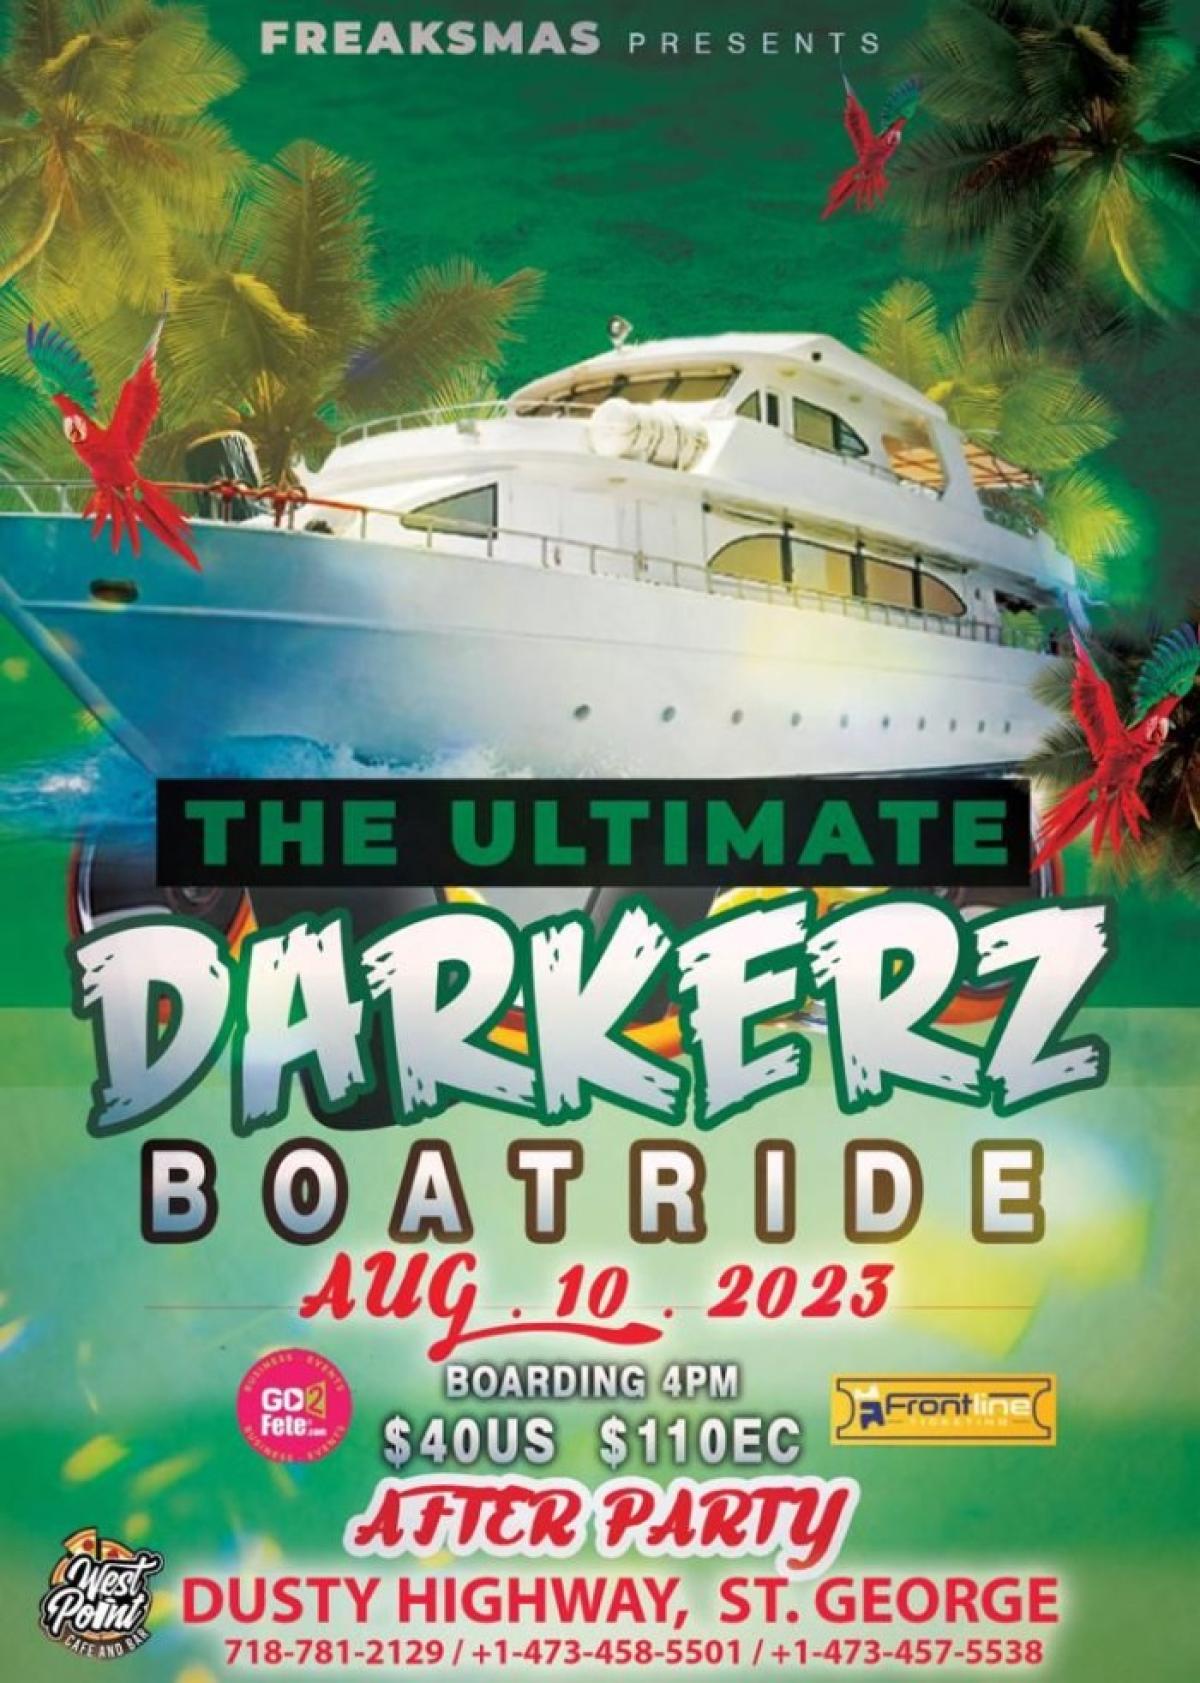 Darkerz Ultimate Boatride flyer or graphic.